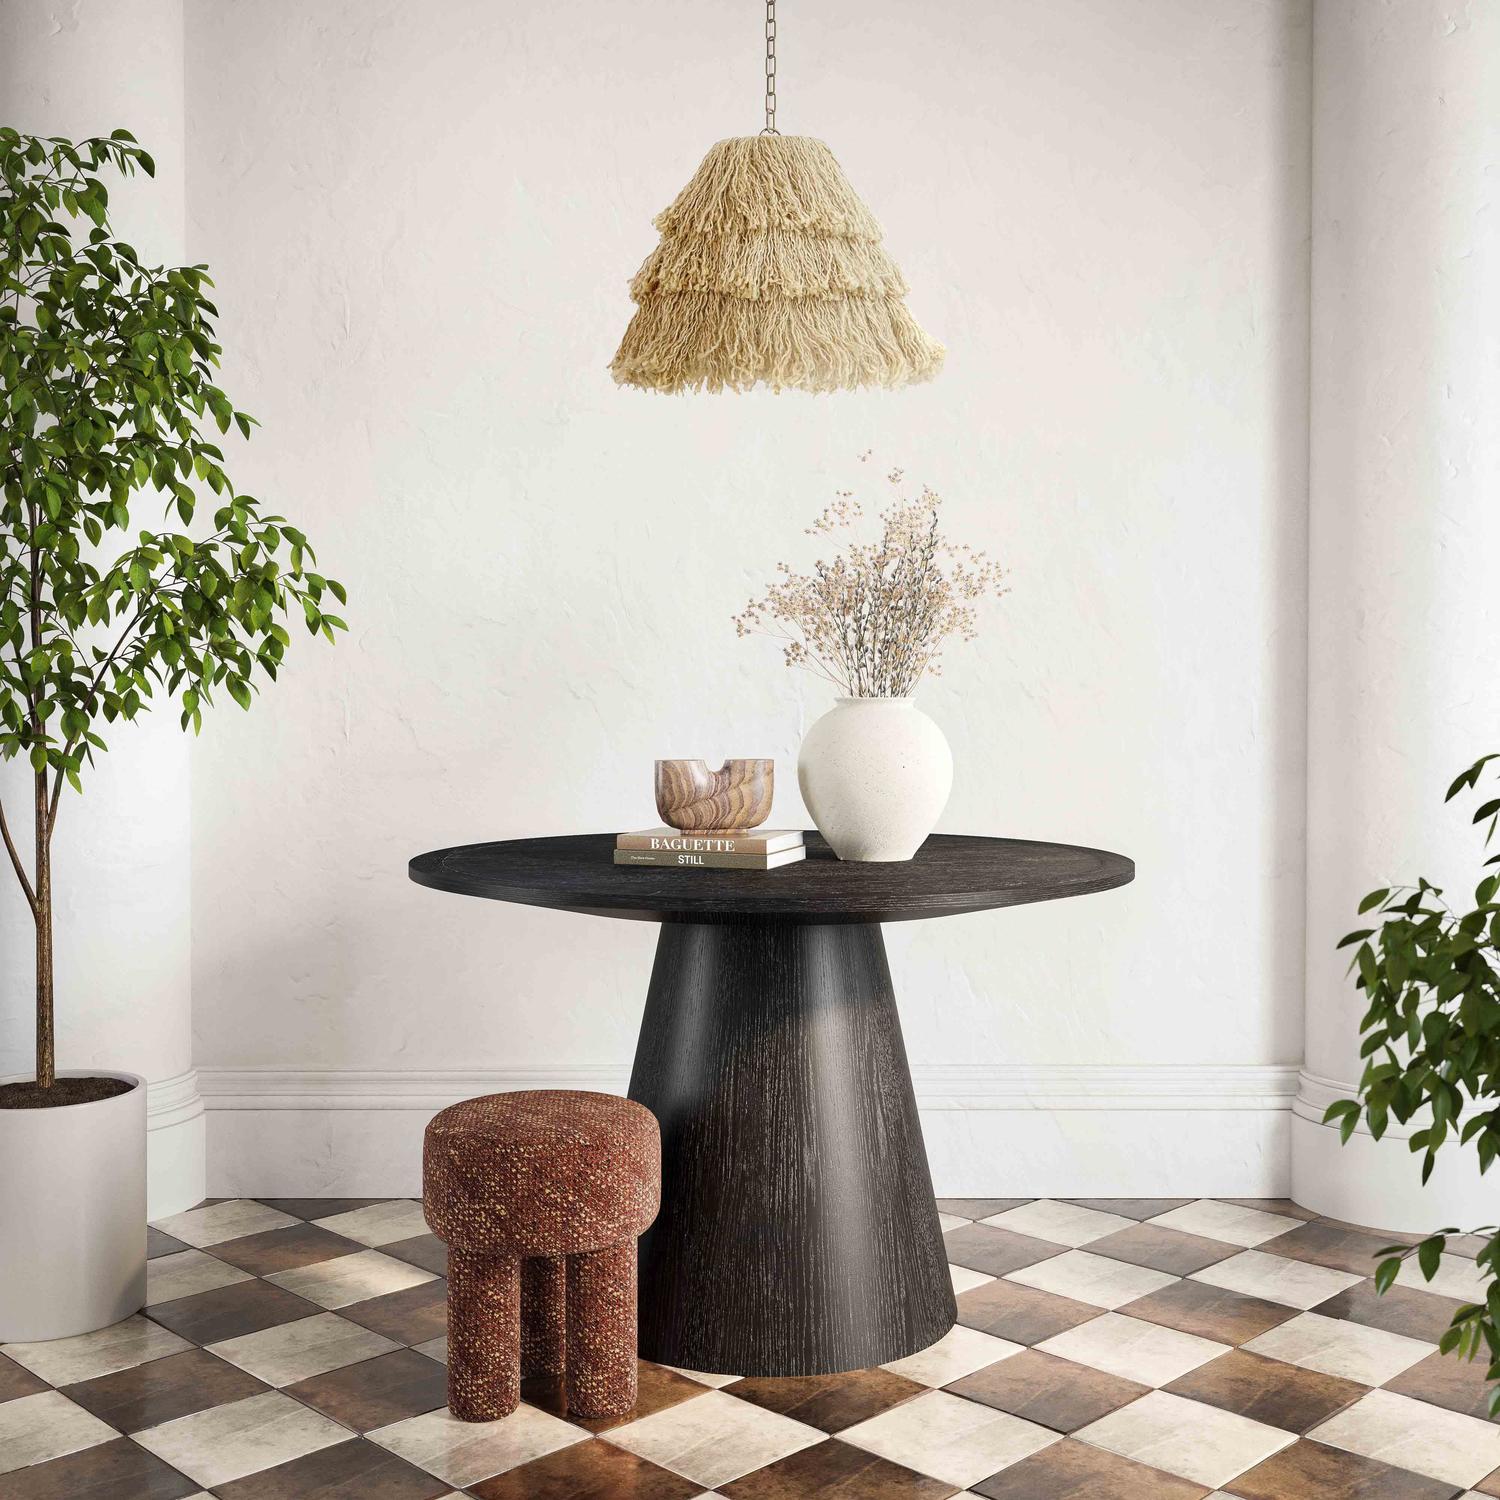 matt black pendant lights Contemporary Design Furniture Pendants Natural